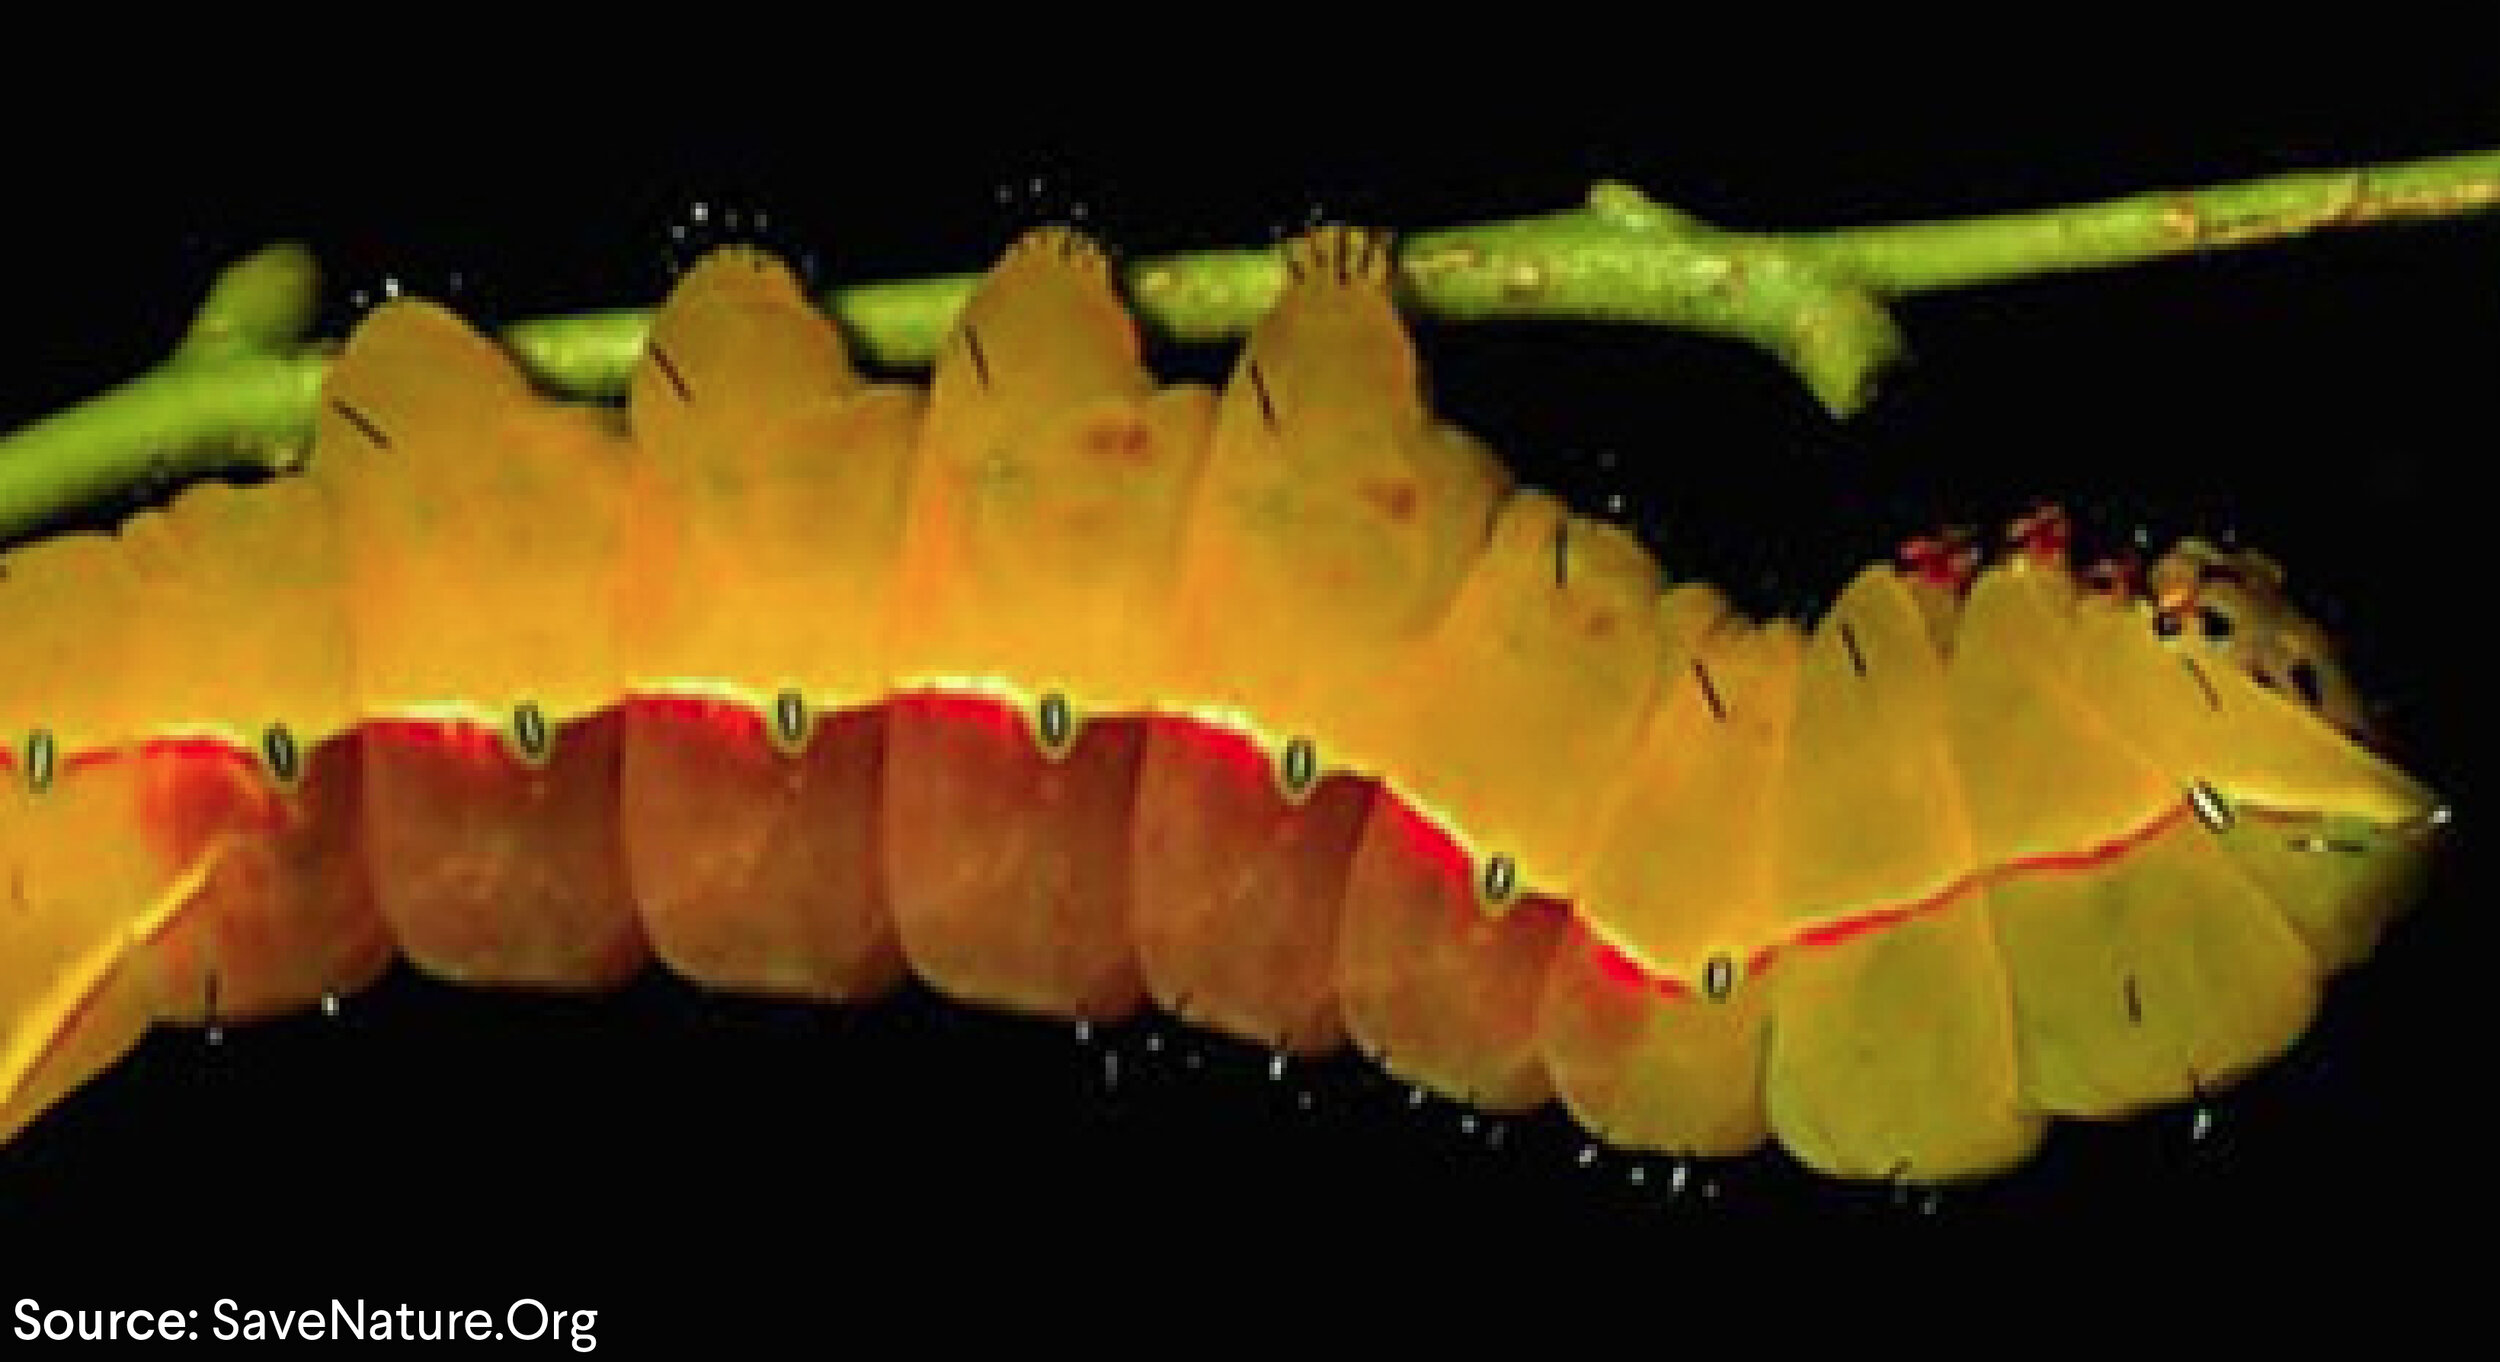 A large orange caterpillar